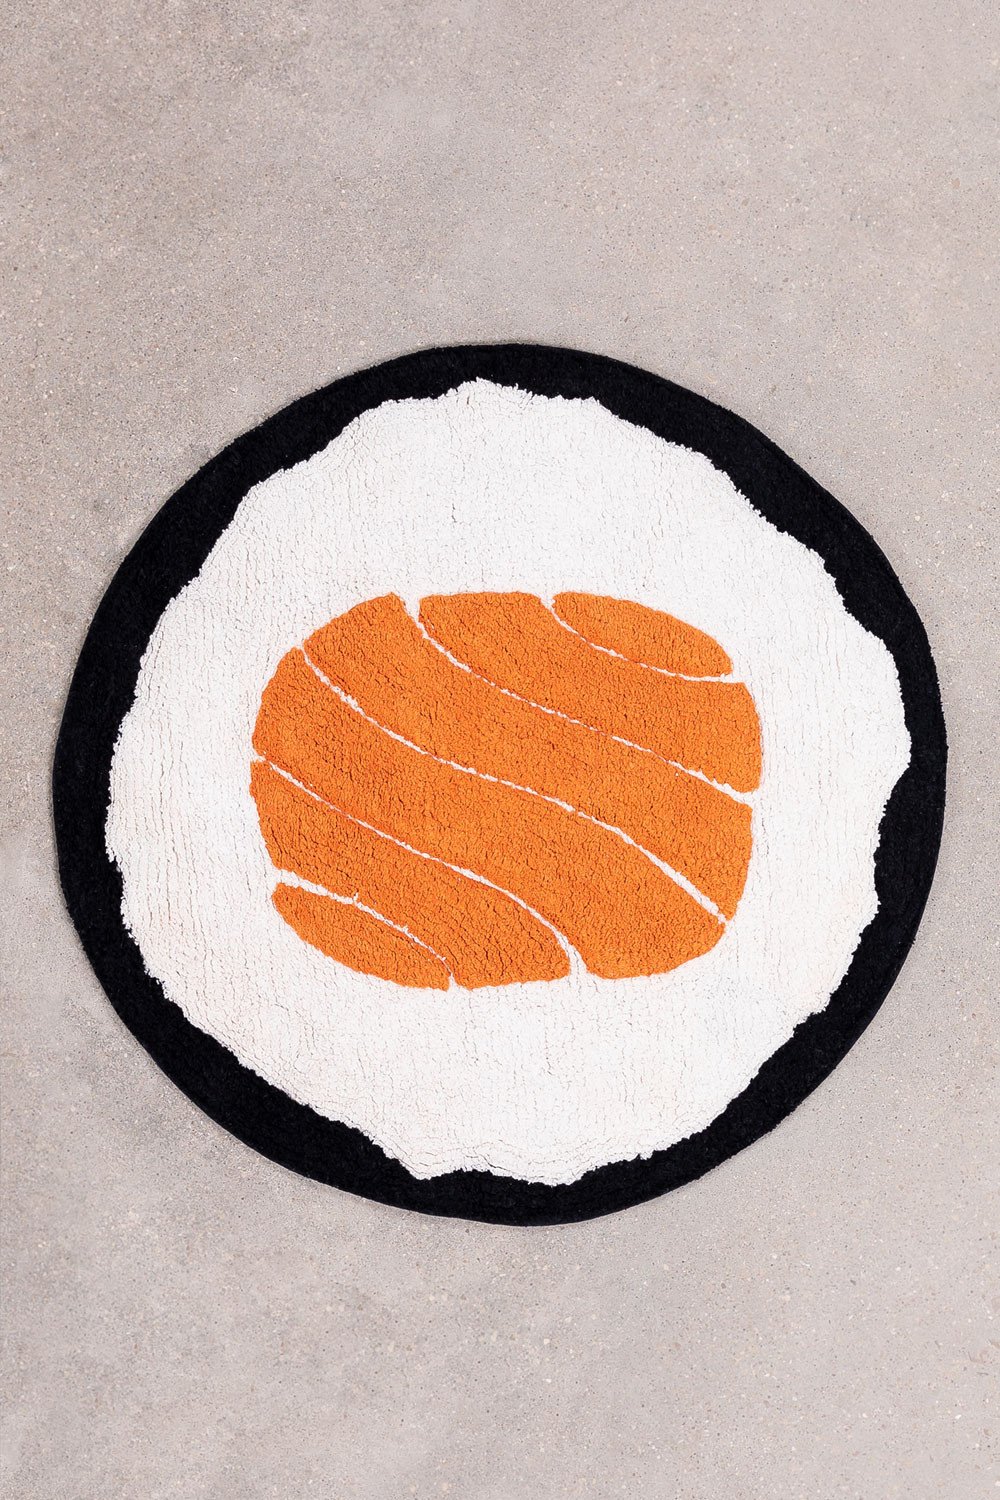 Katoenen Badmat (Ø61 cm) Sushi, galerij beeld 1